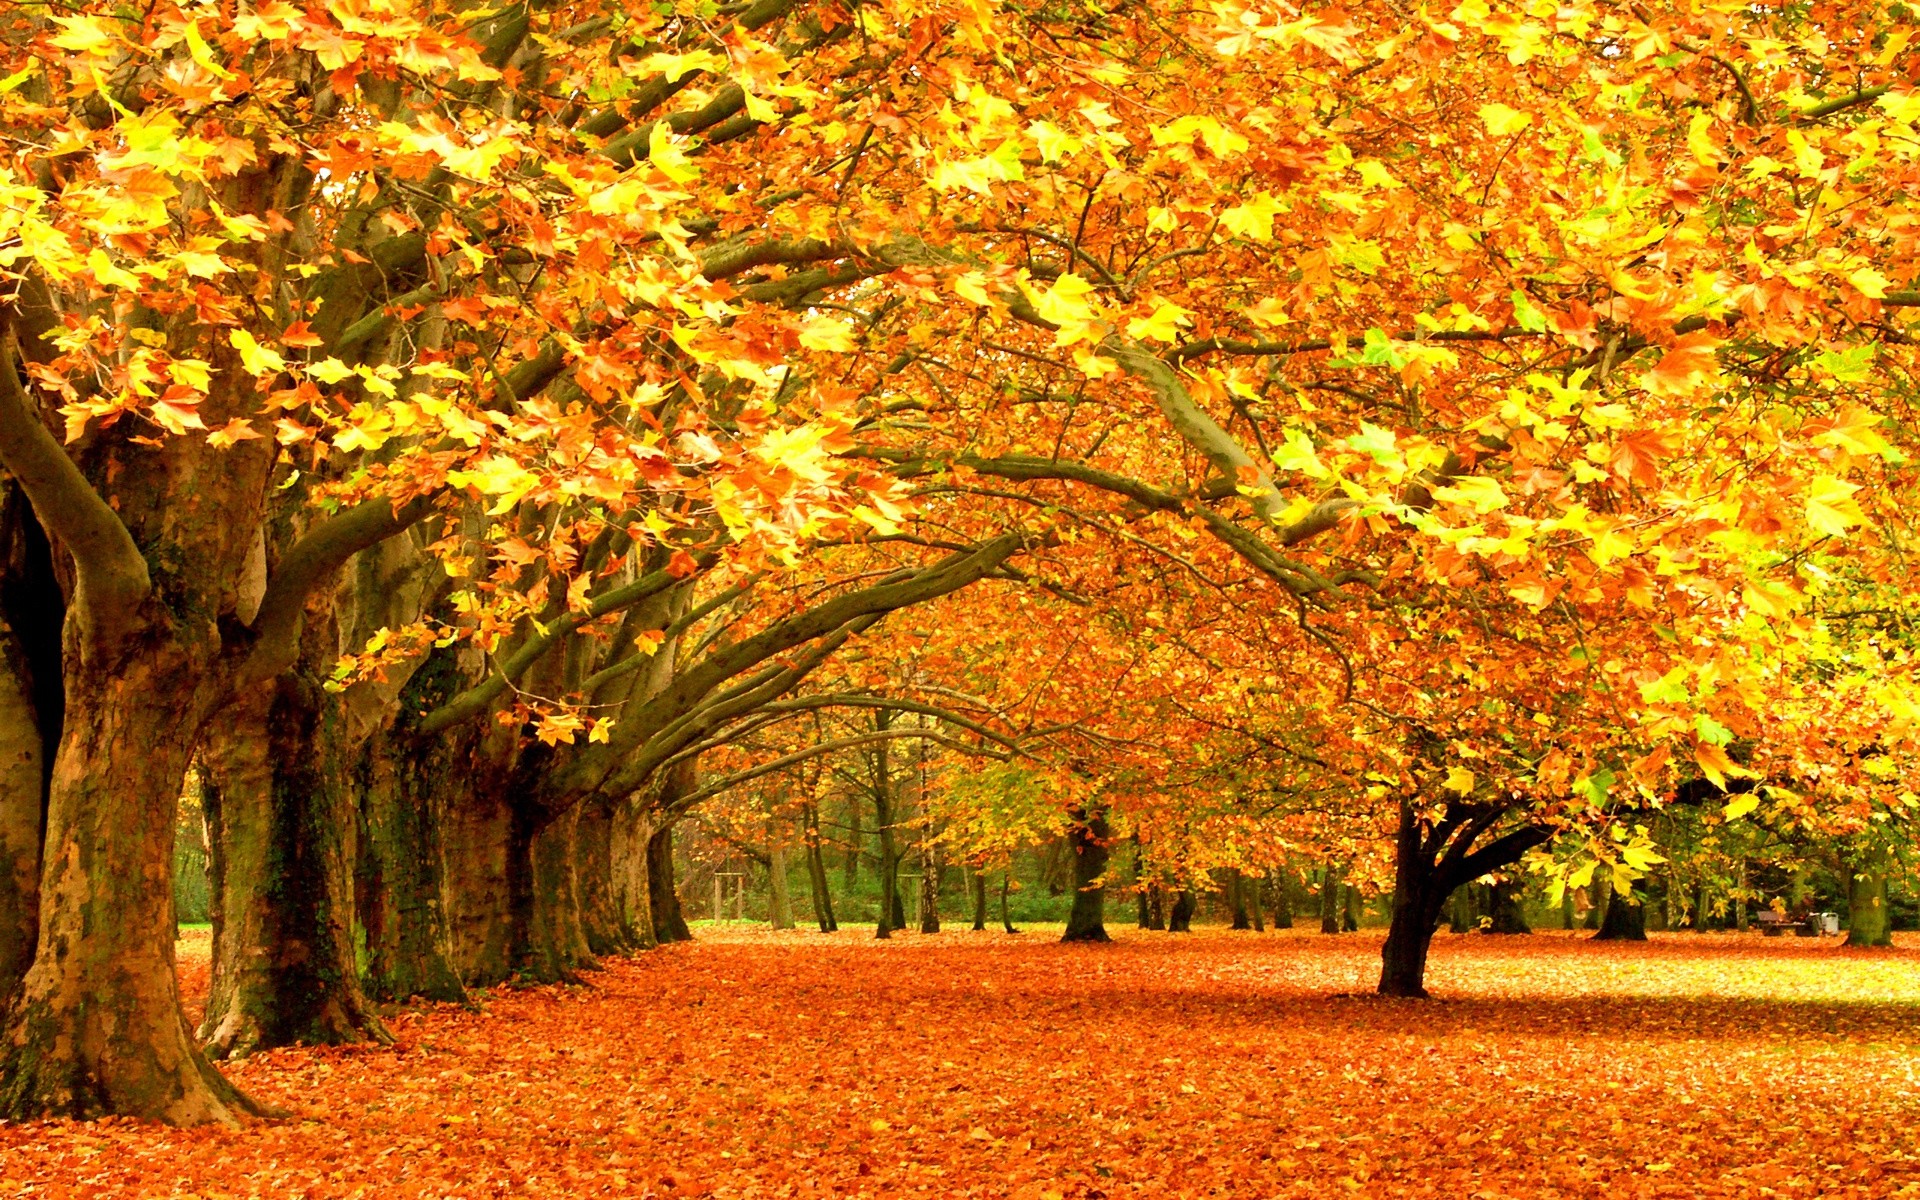  Autumn  wallpaper  Widescreen   Download free amazing High 